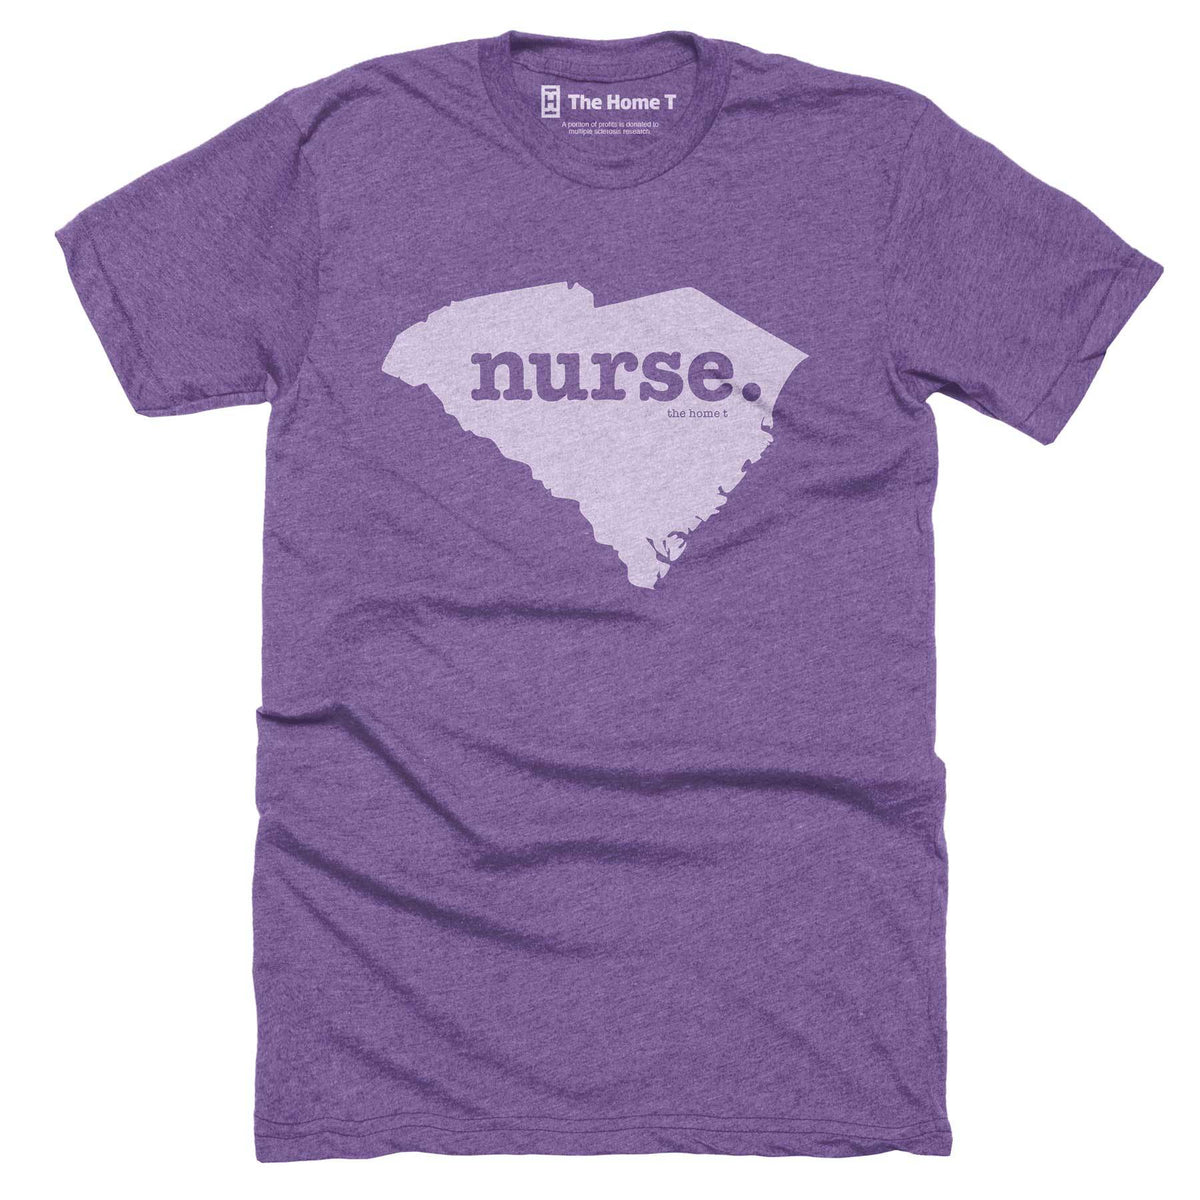 South Carolina Nurse Home T-Shirt Occupation The Home T